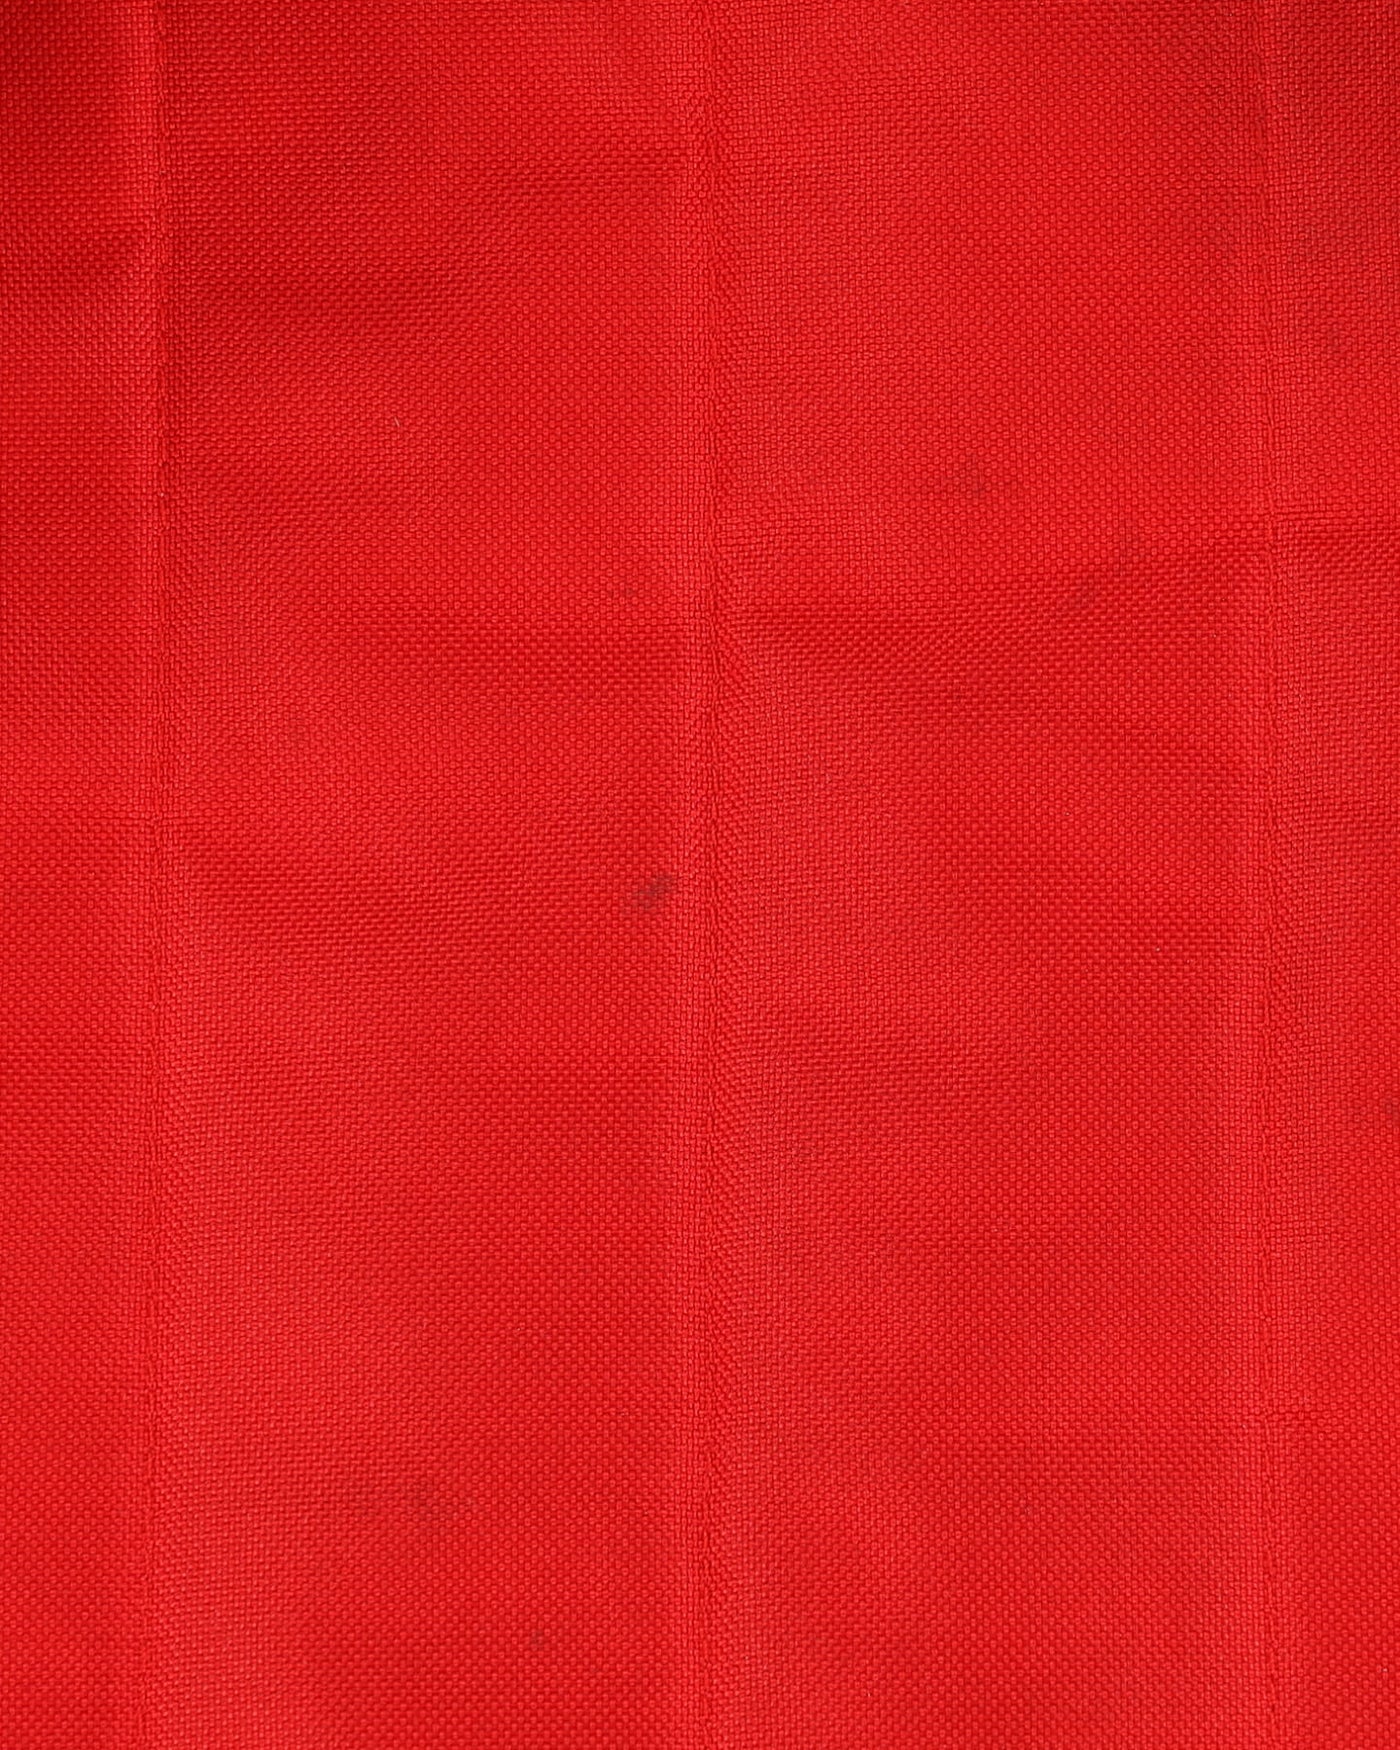 Off-White Well-Worn Red "Backpack" Virgil Abloh Design Rucksack / Backpack